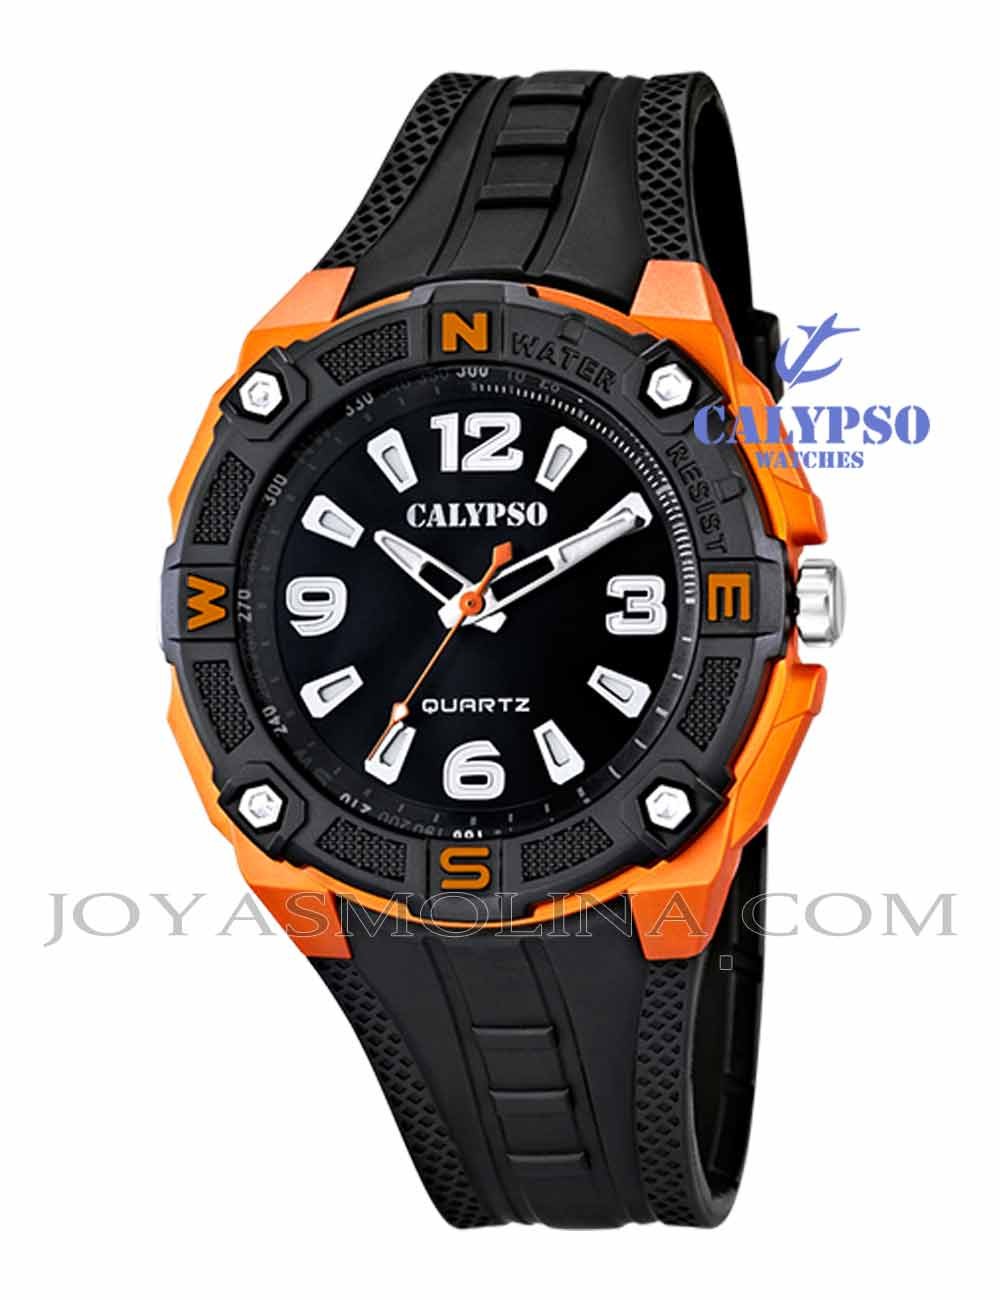 Reloj Calypso hombre o niño digital silicona negro y naranja